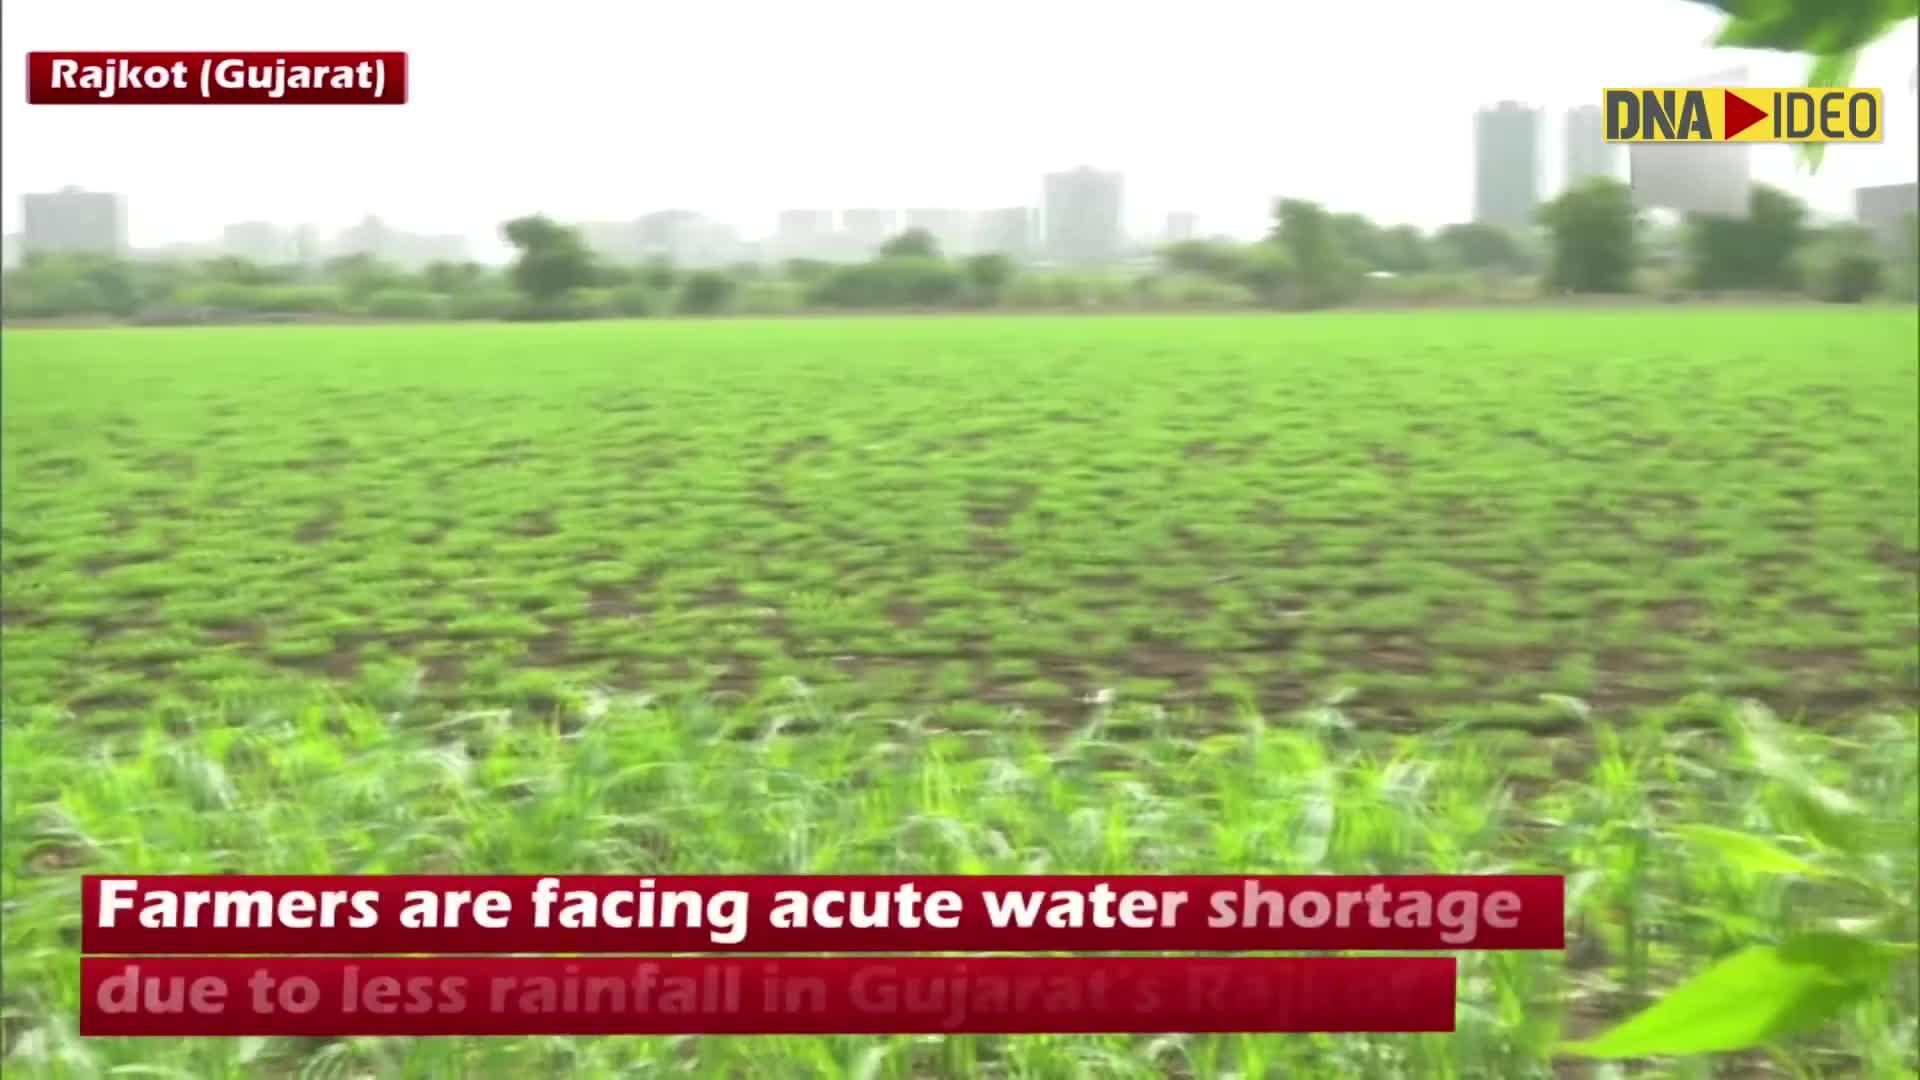 Water crisis hits Gujarat farmers amid kharif season - DNA India